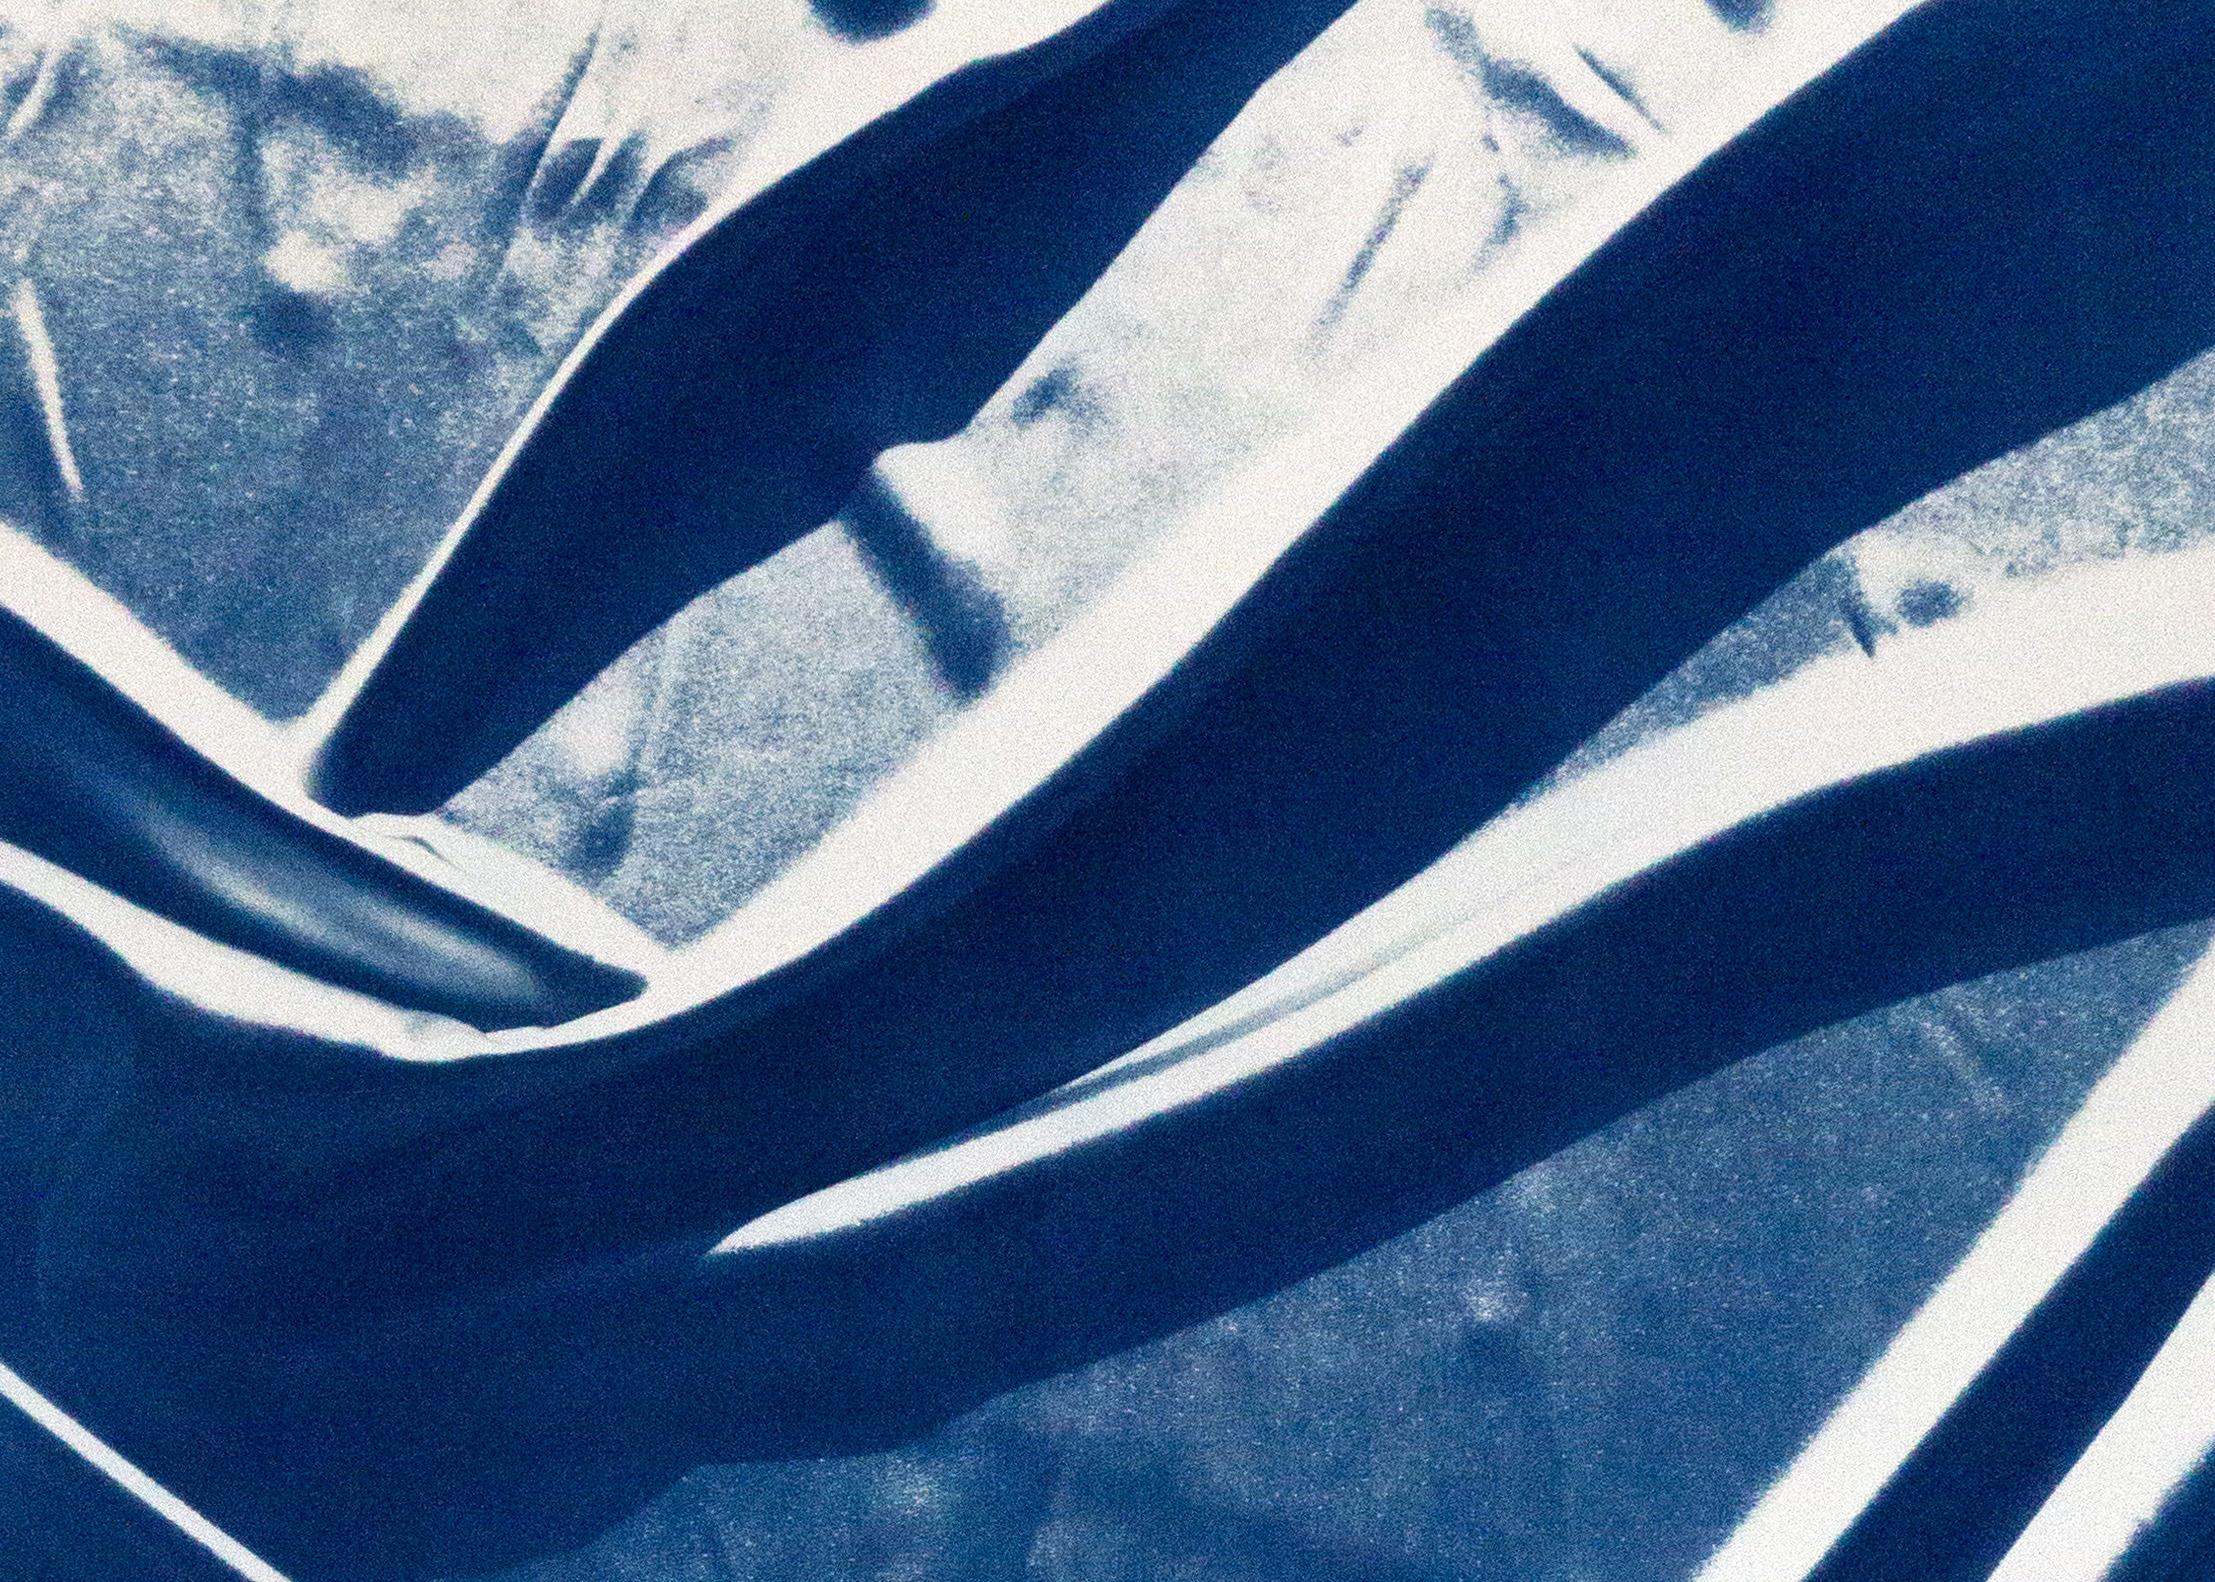 cyanotype on silk